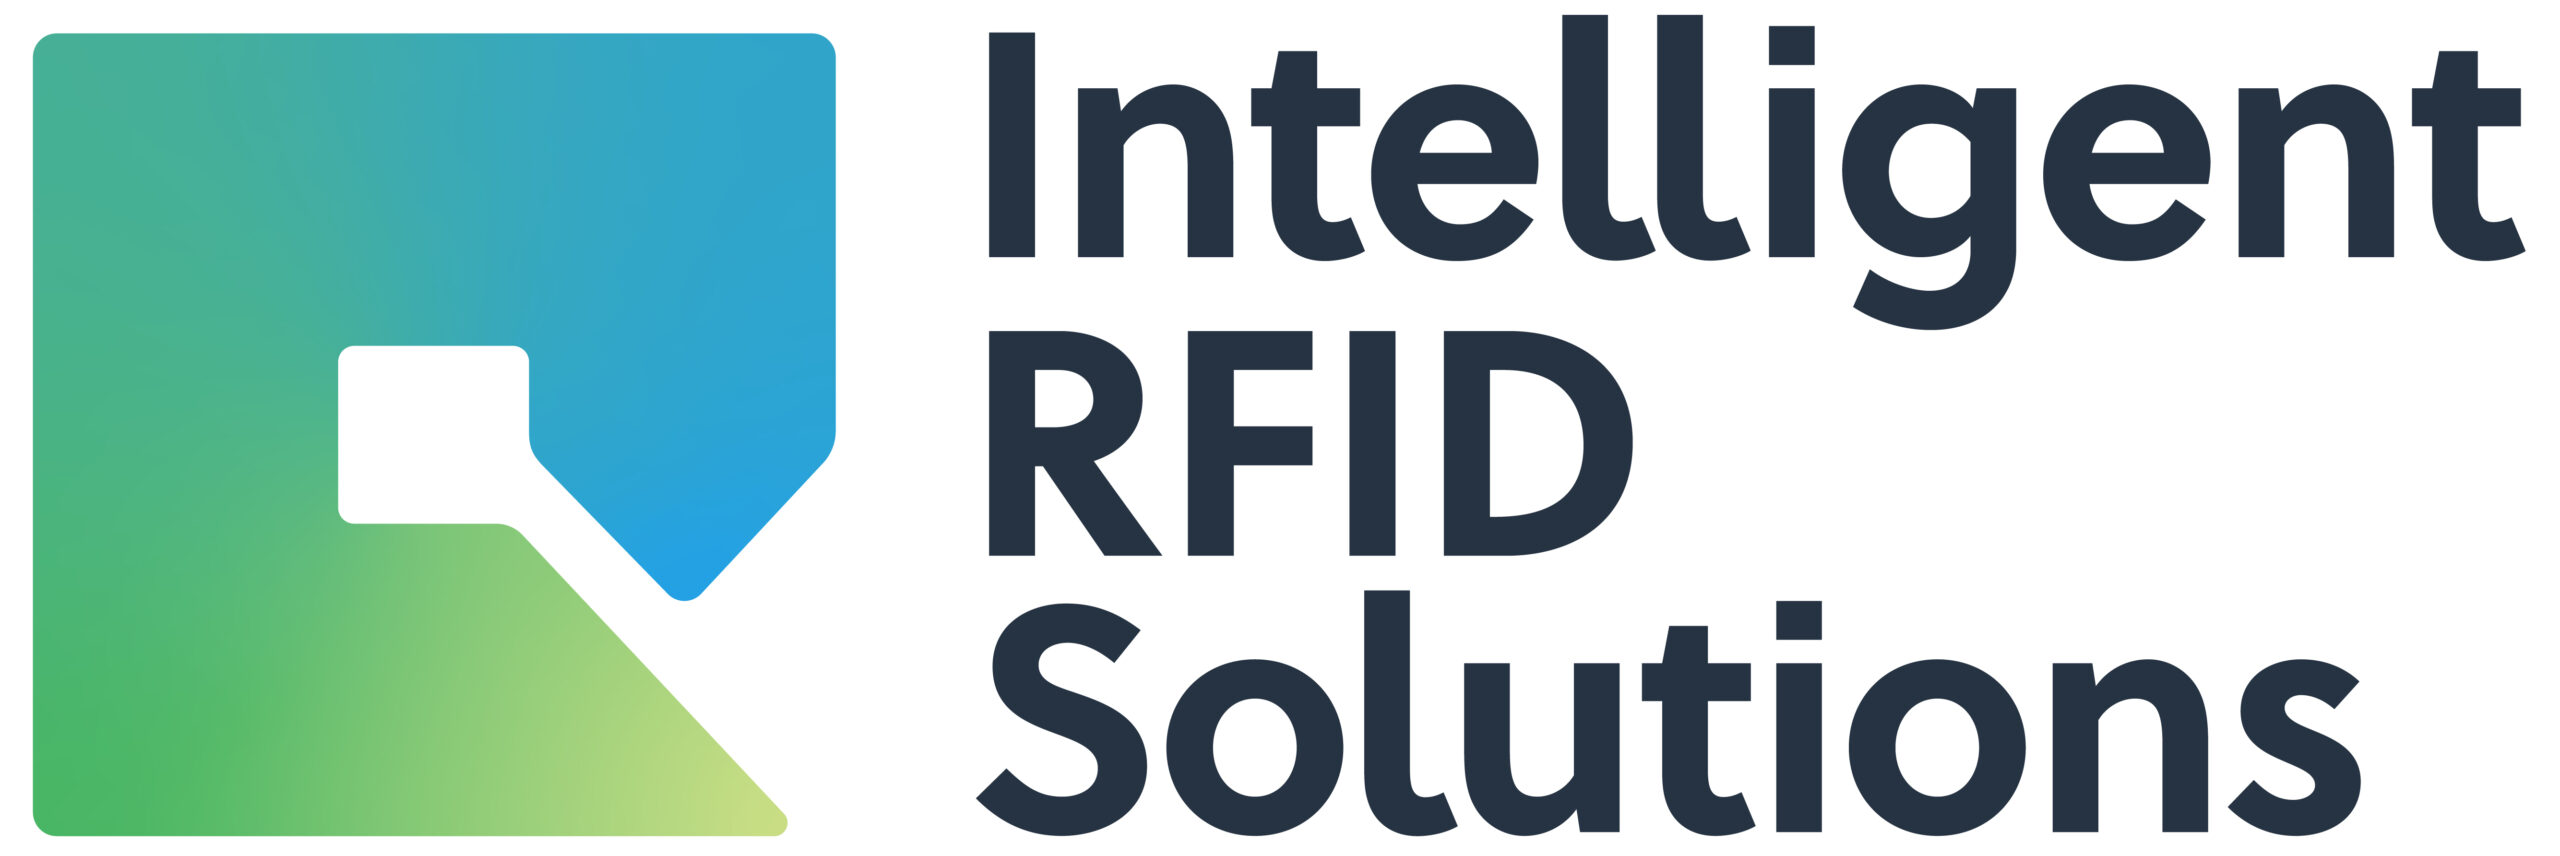 Intelligent RFID Solutions - Stand No. 2